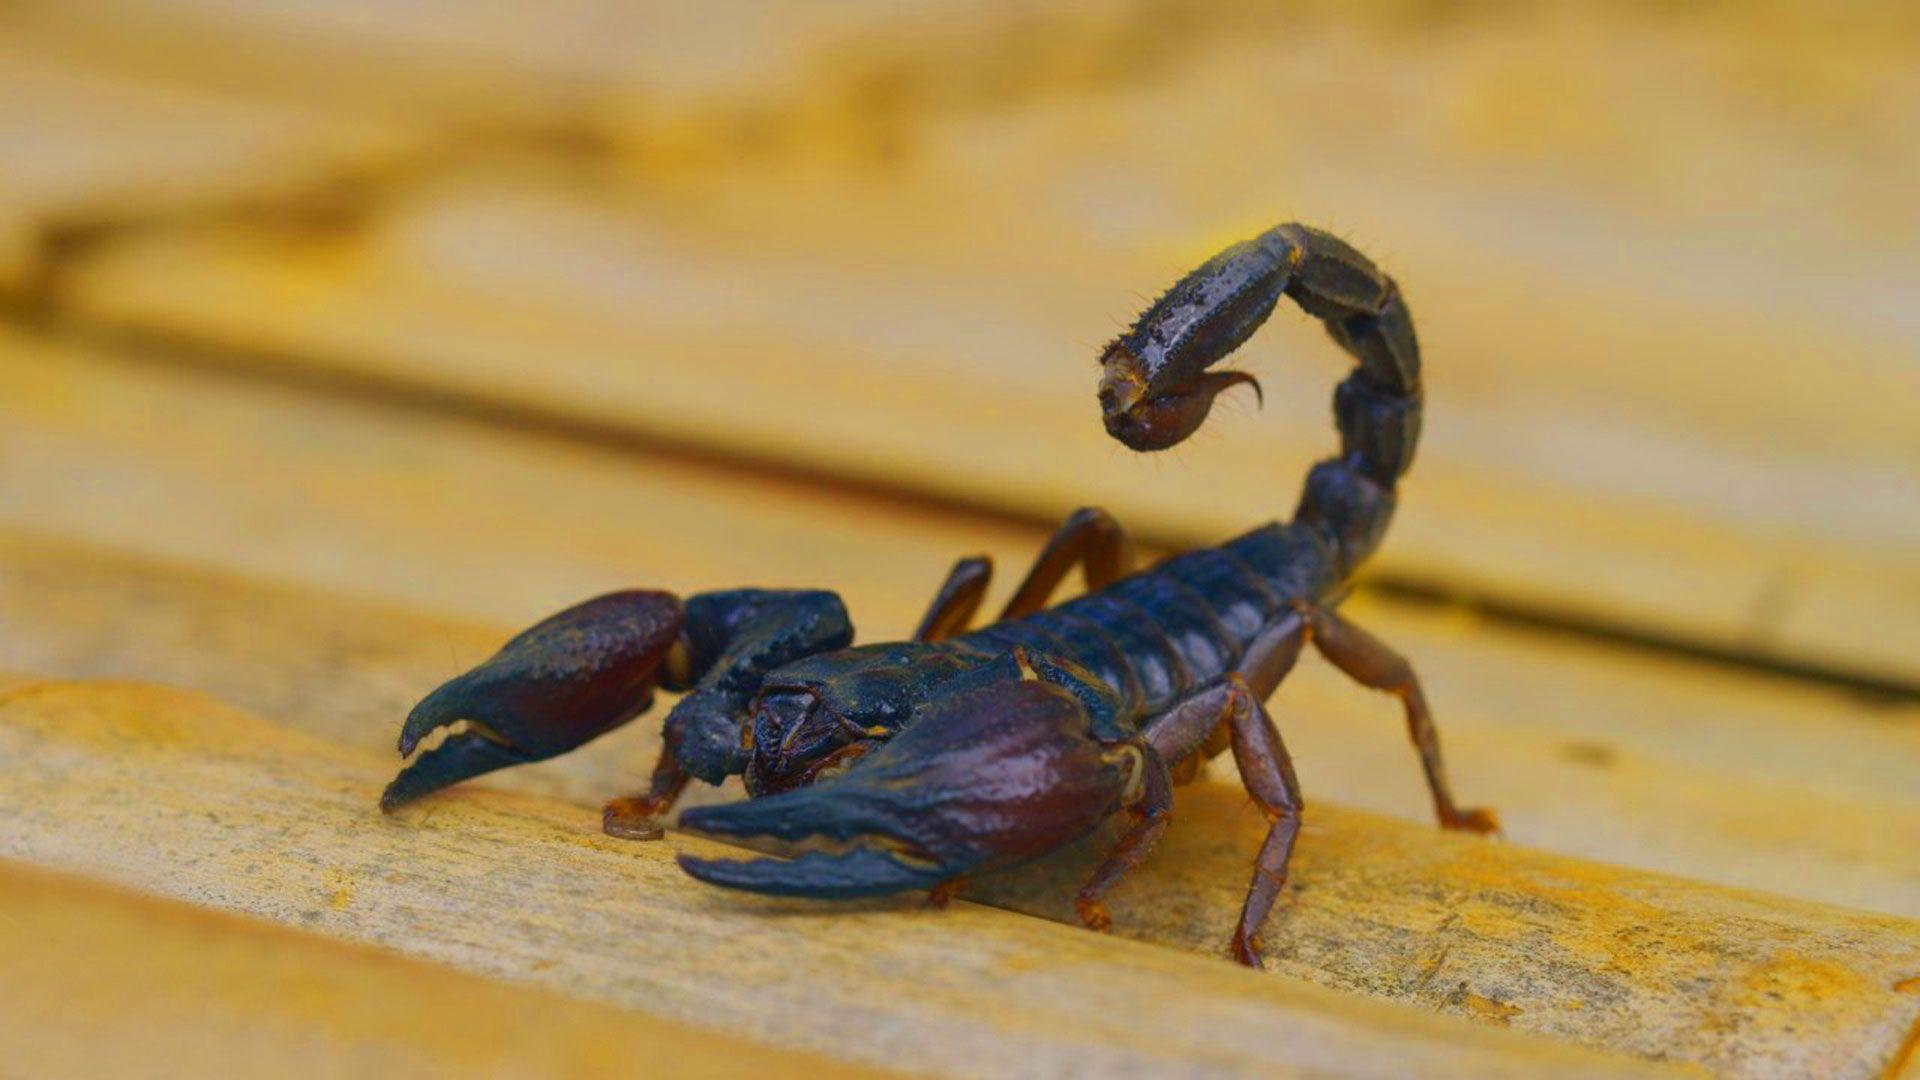 hd pics photo stunning attractive scorpion insects macro